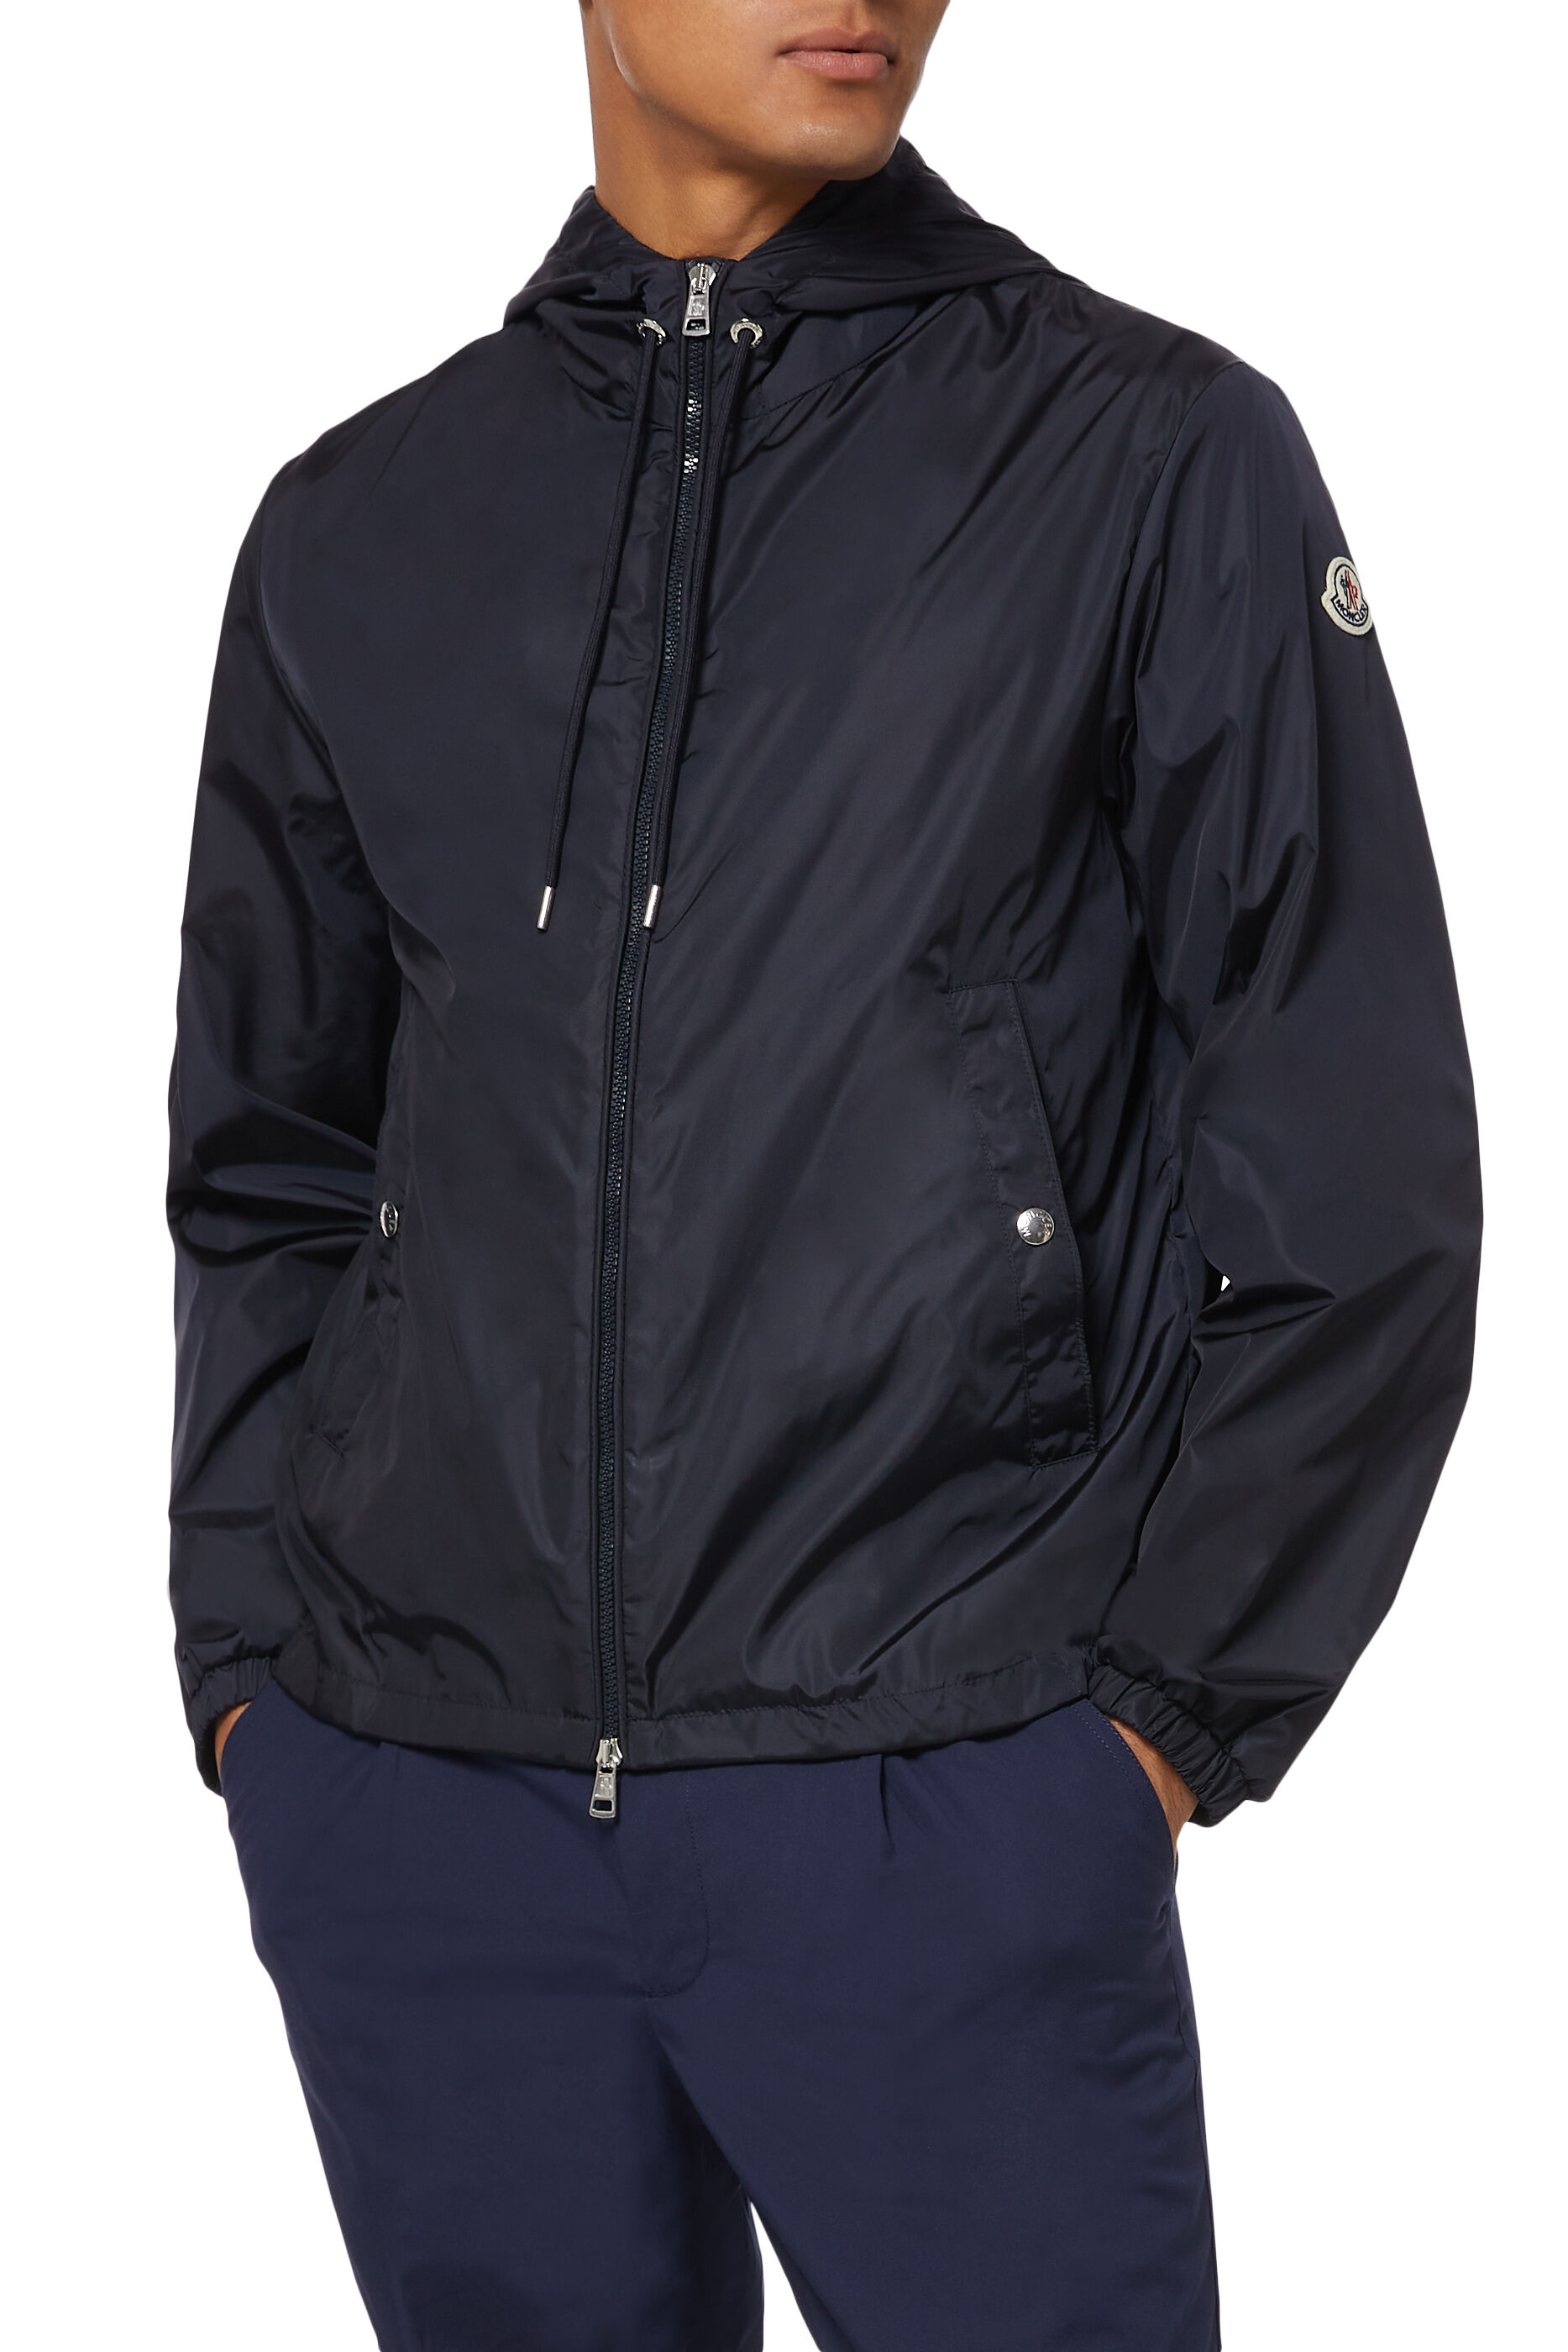 moncler grimpeurs hooded zip jacket